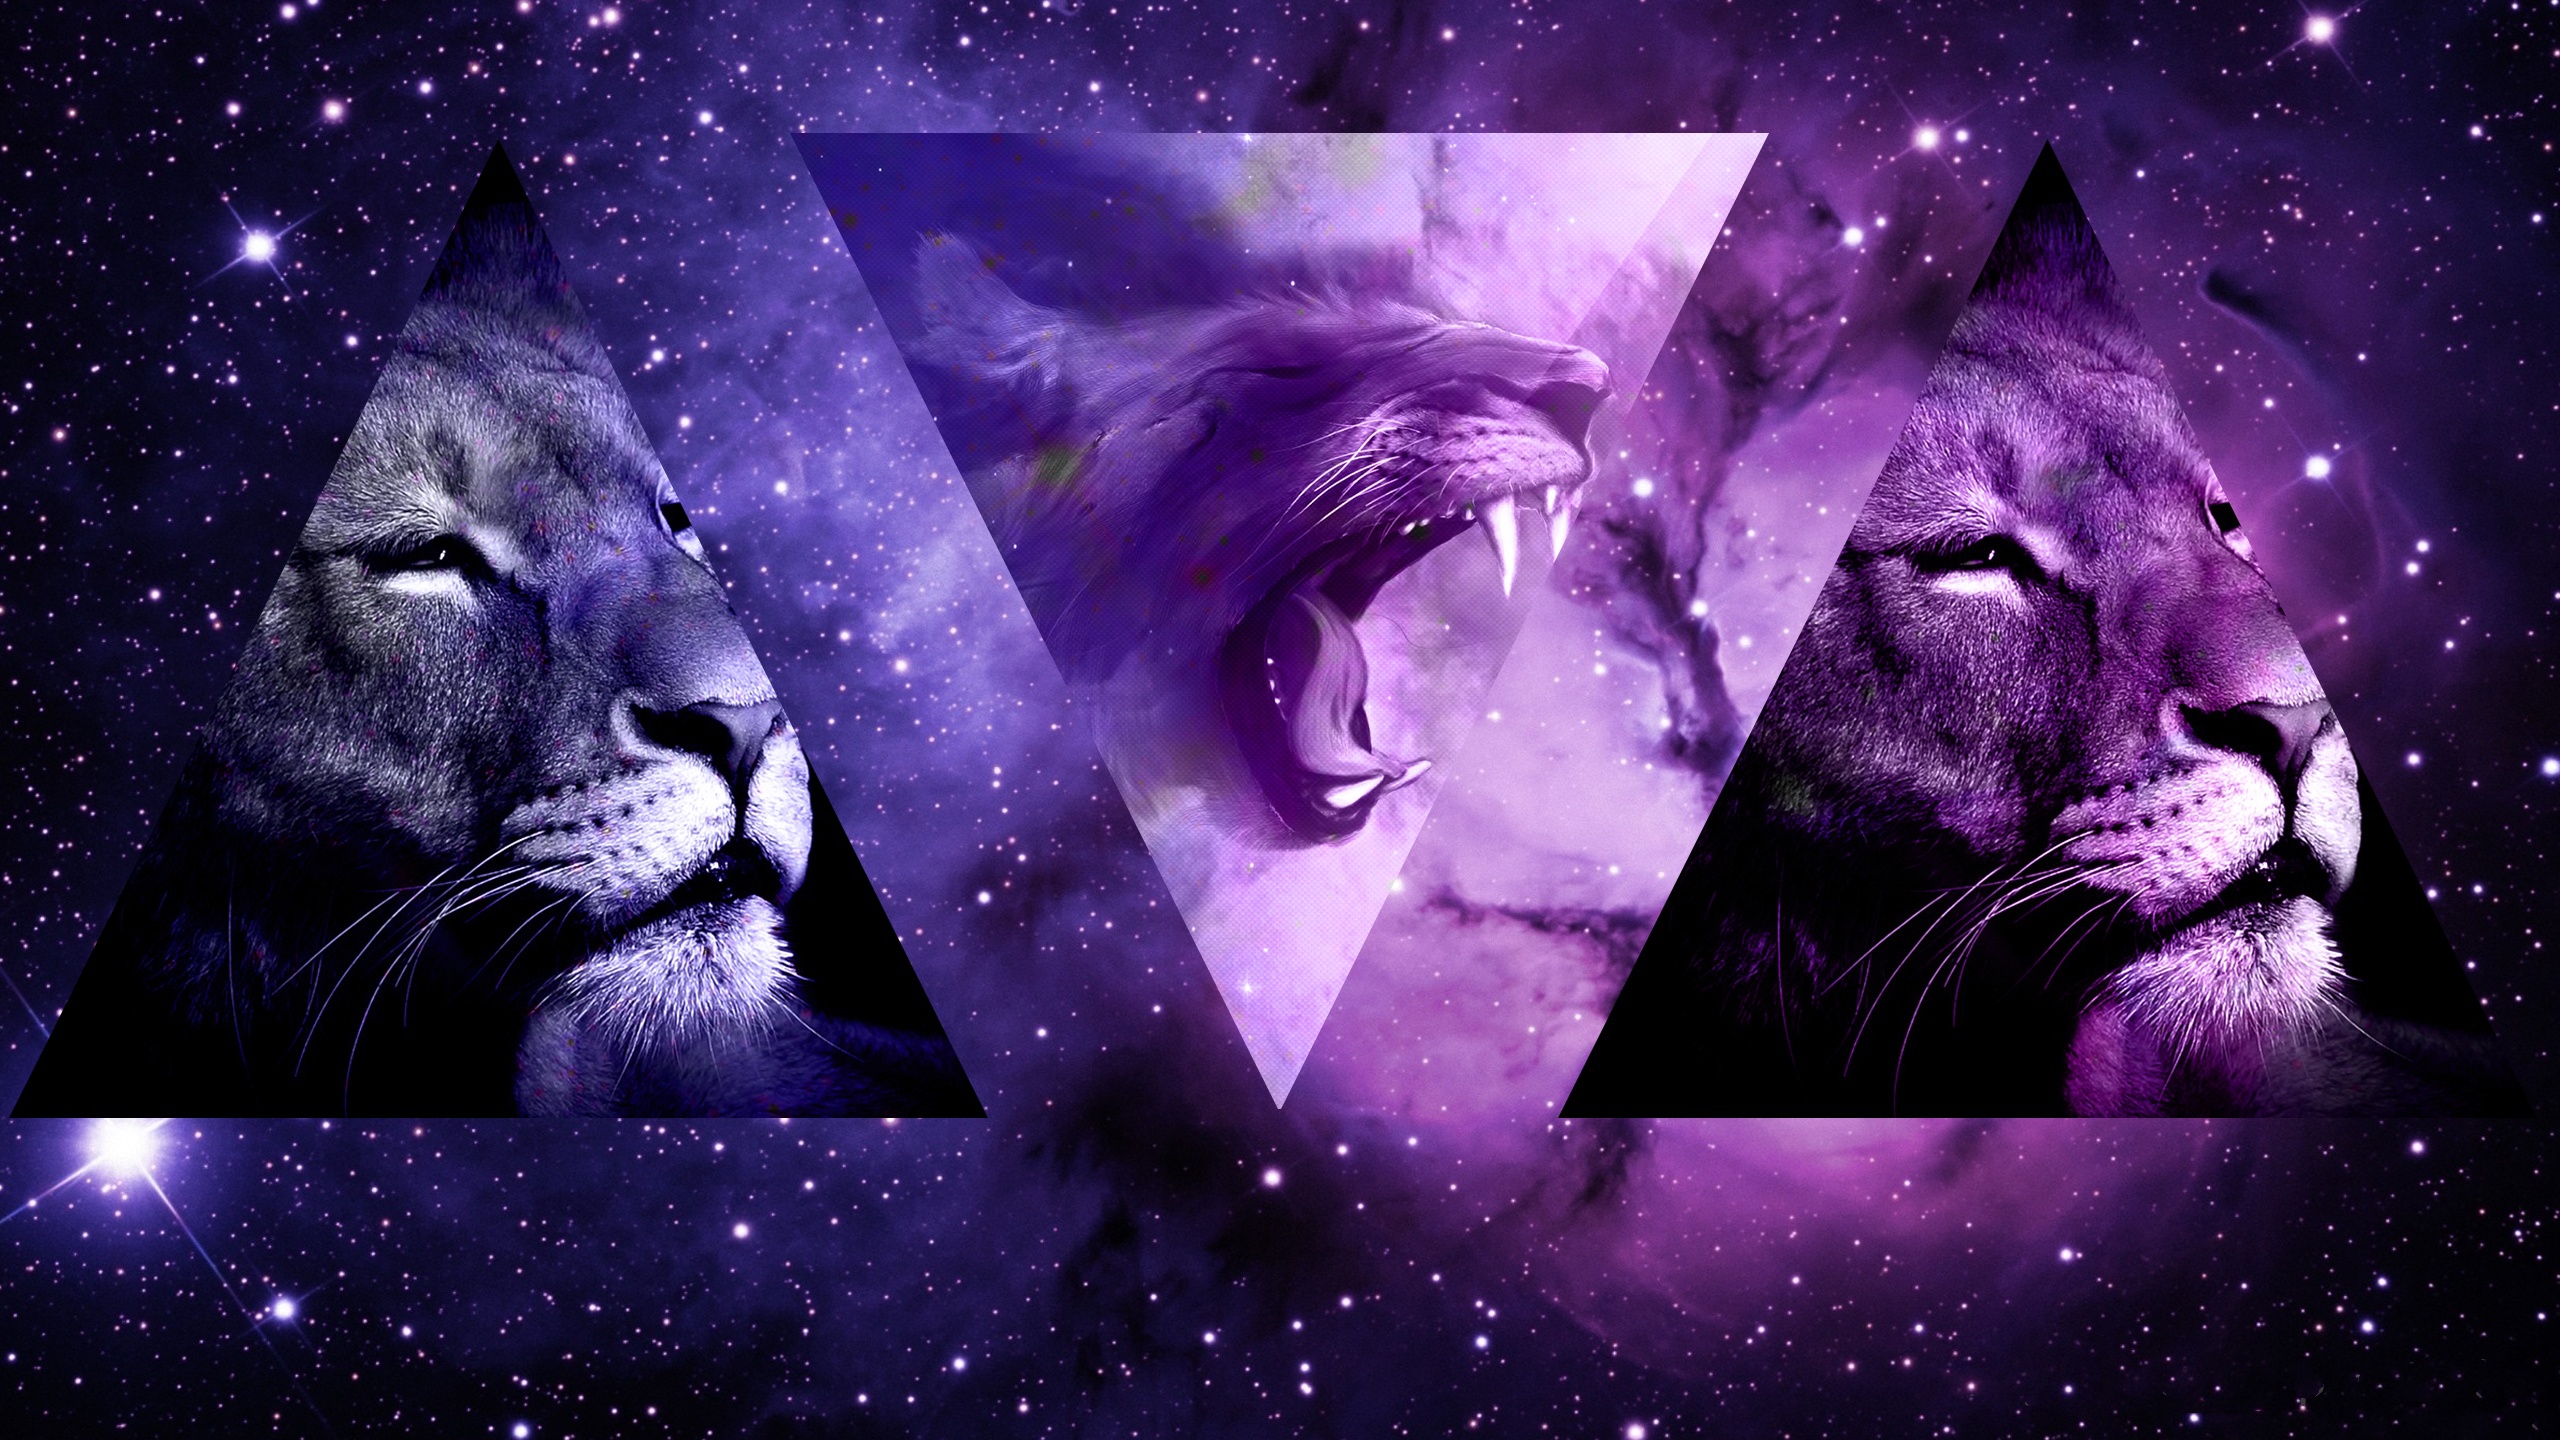 wolf vs lion wallpaper